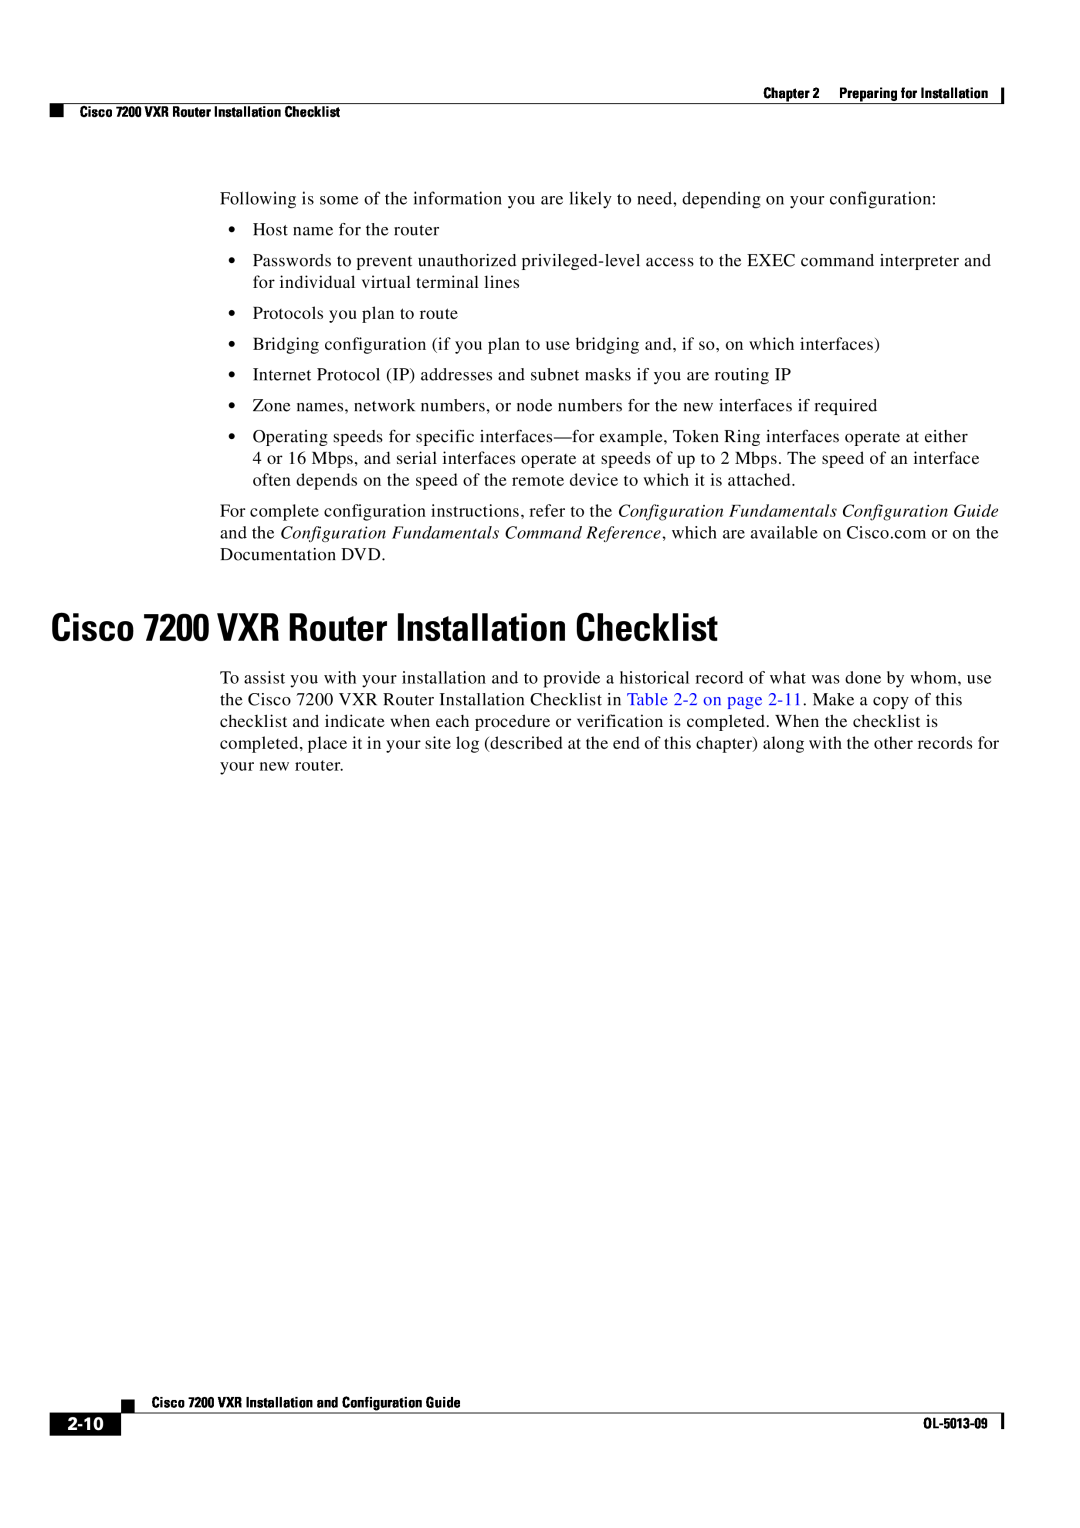 Cisco Systems manual Cisco 7200 VXR Router Installation Checklist, 2-10 